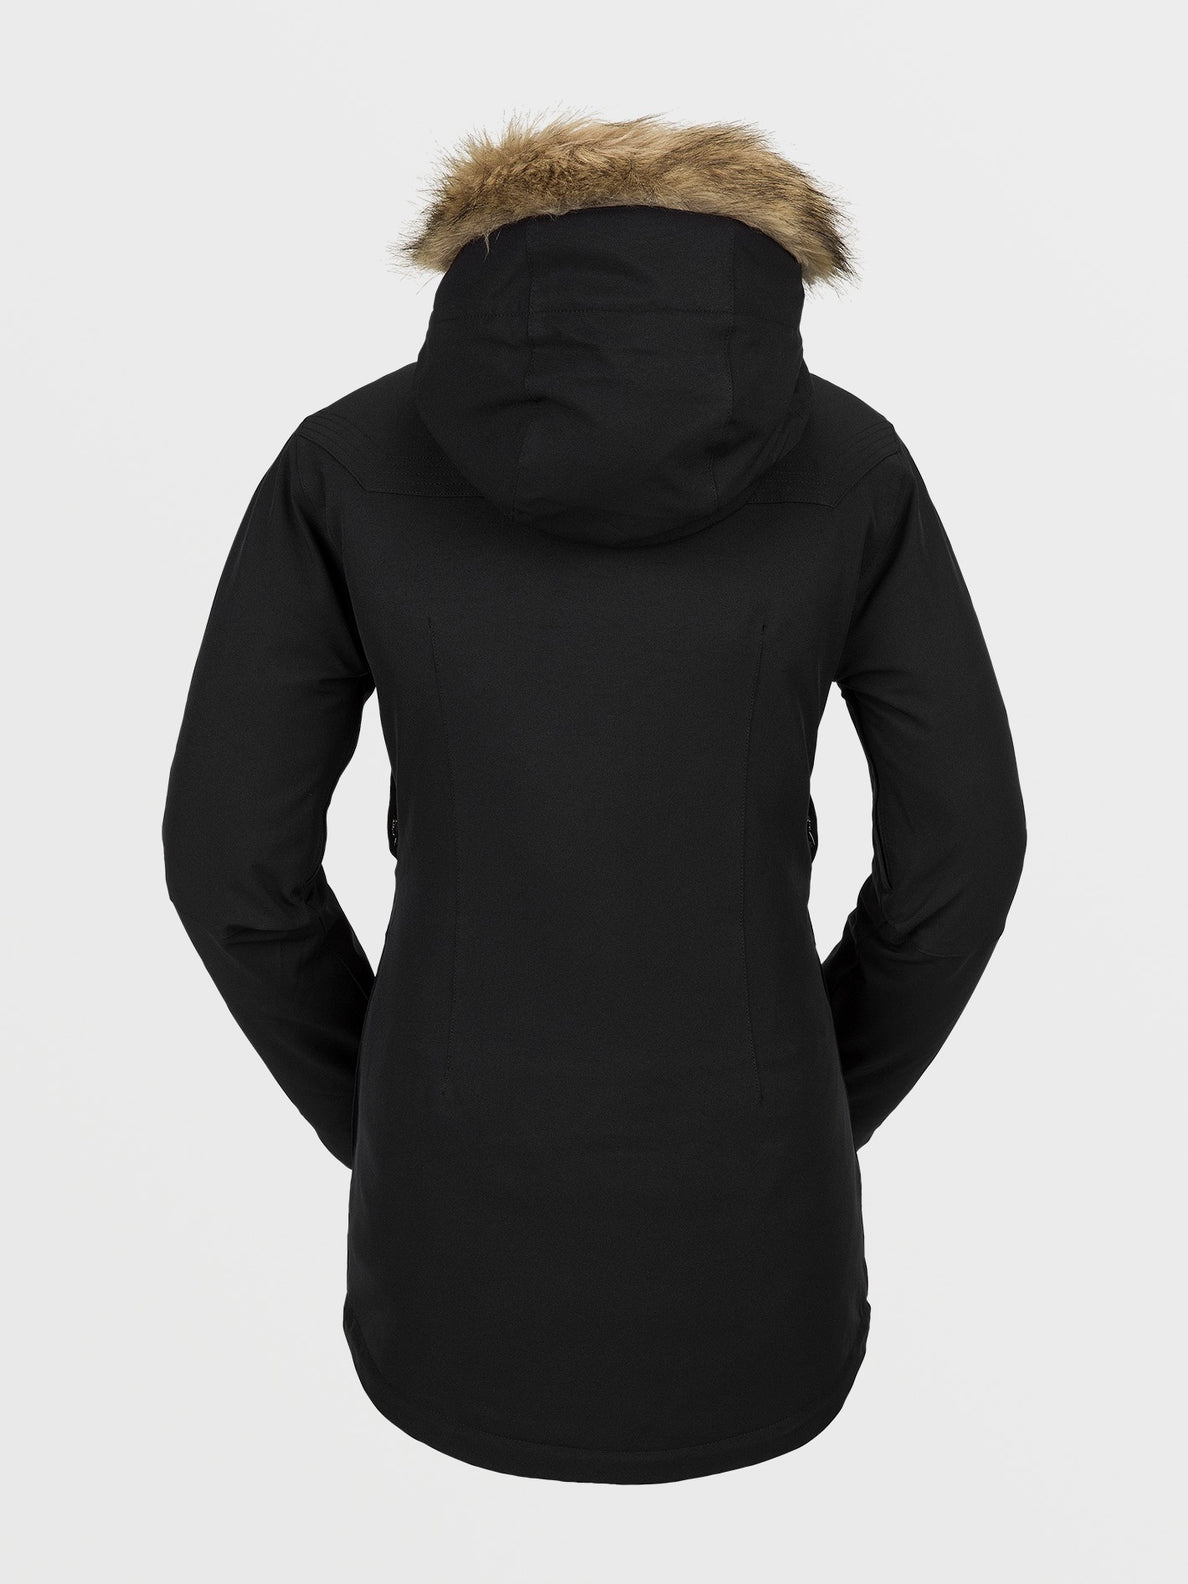 Volcom Women's Shadow Insulated Jacket - Black